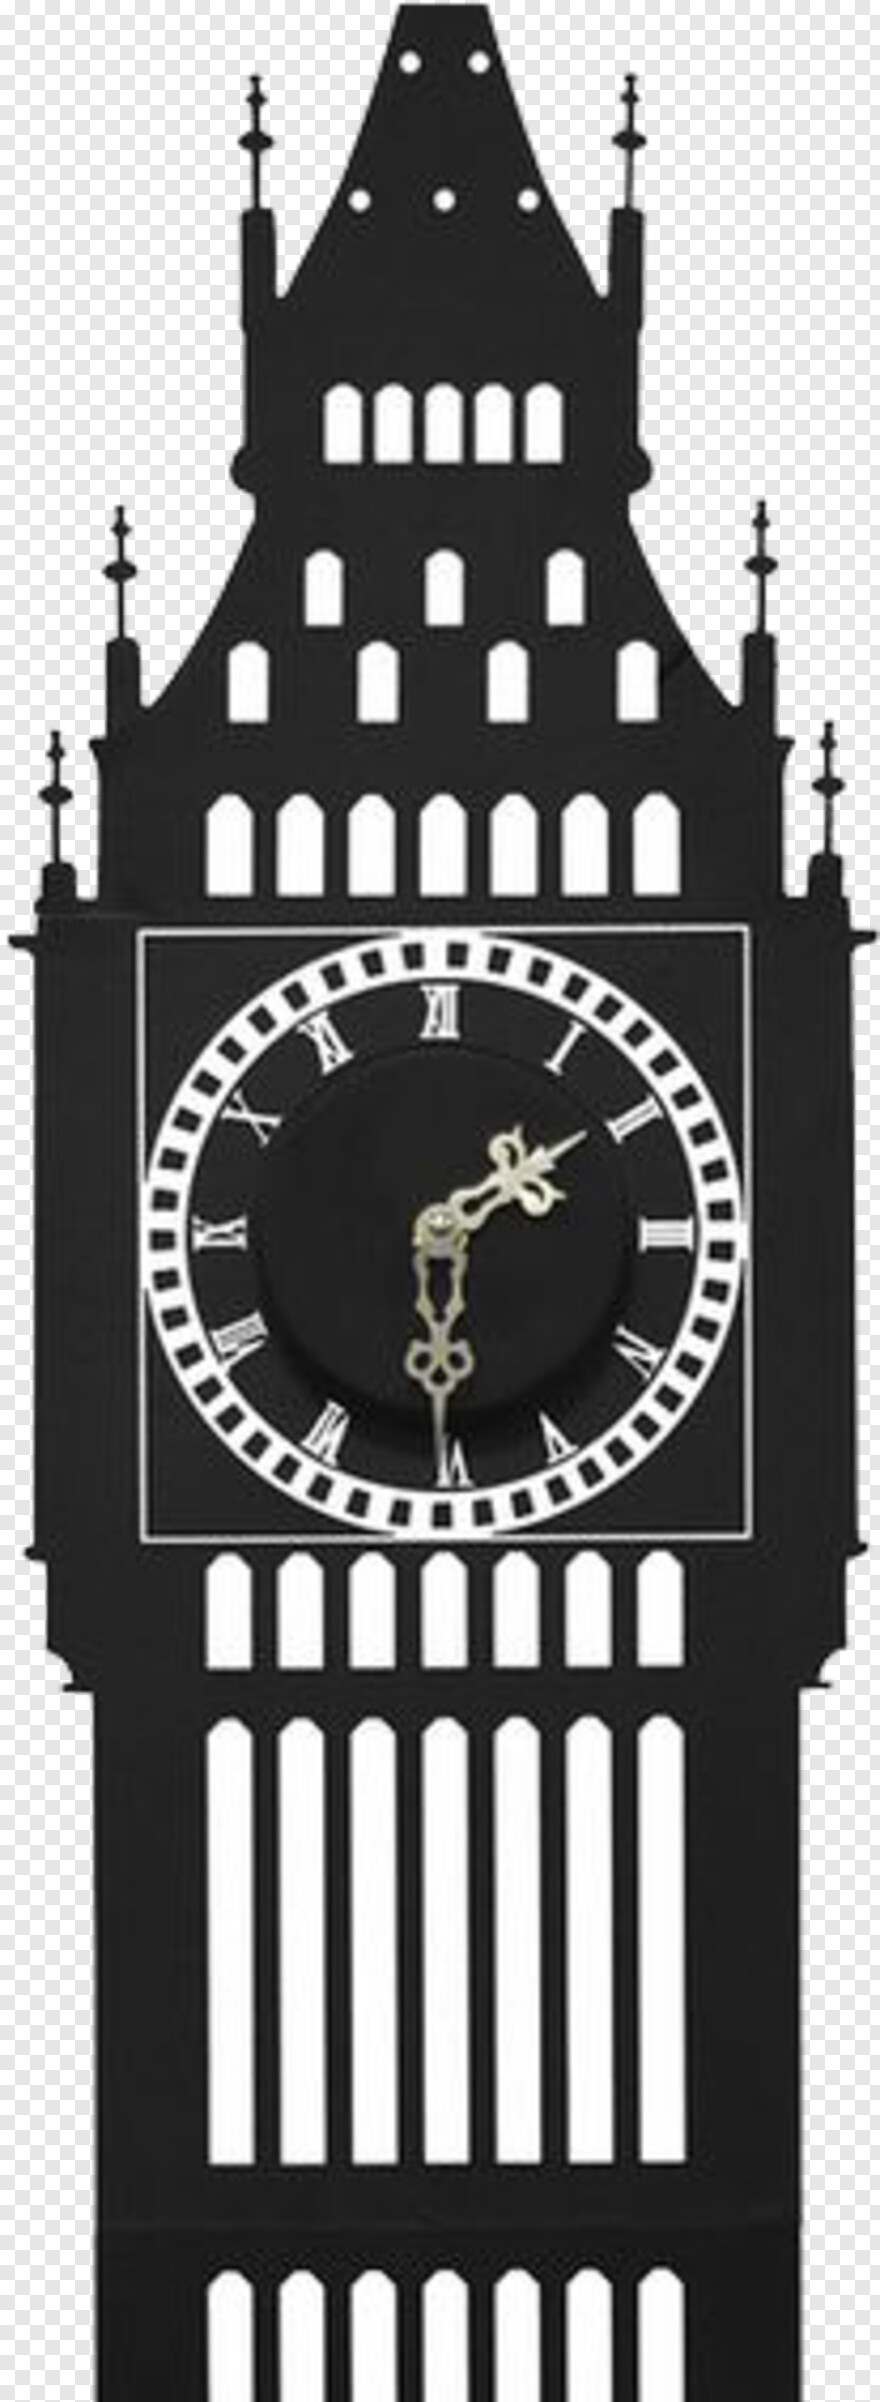  Digital Clock, Clock Face, Water Tower, Eiffel Tower Silhouette, Clock, Clock Vector